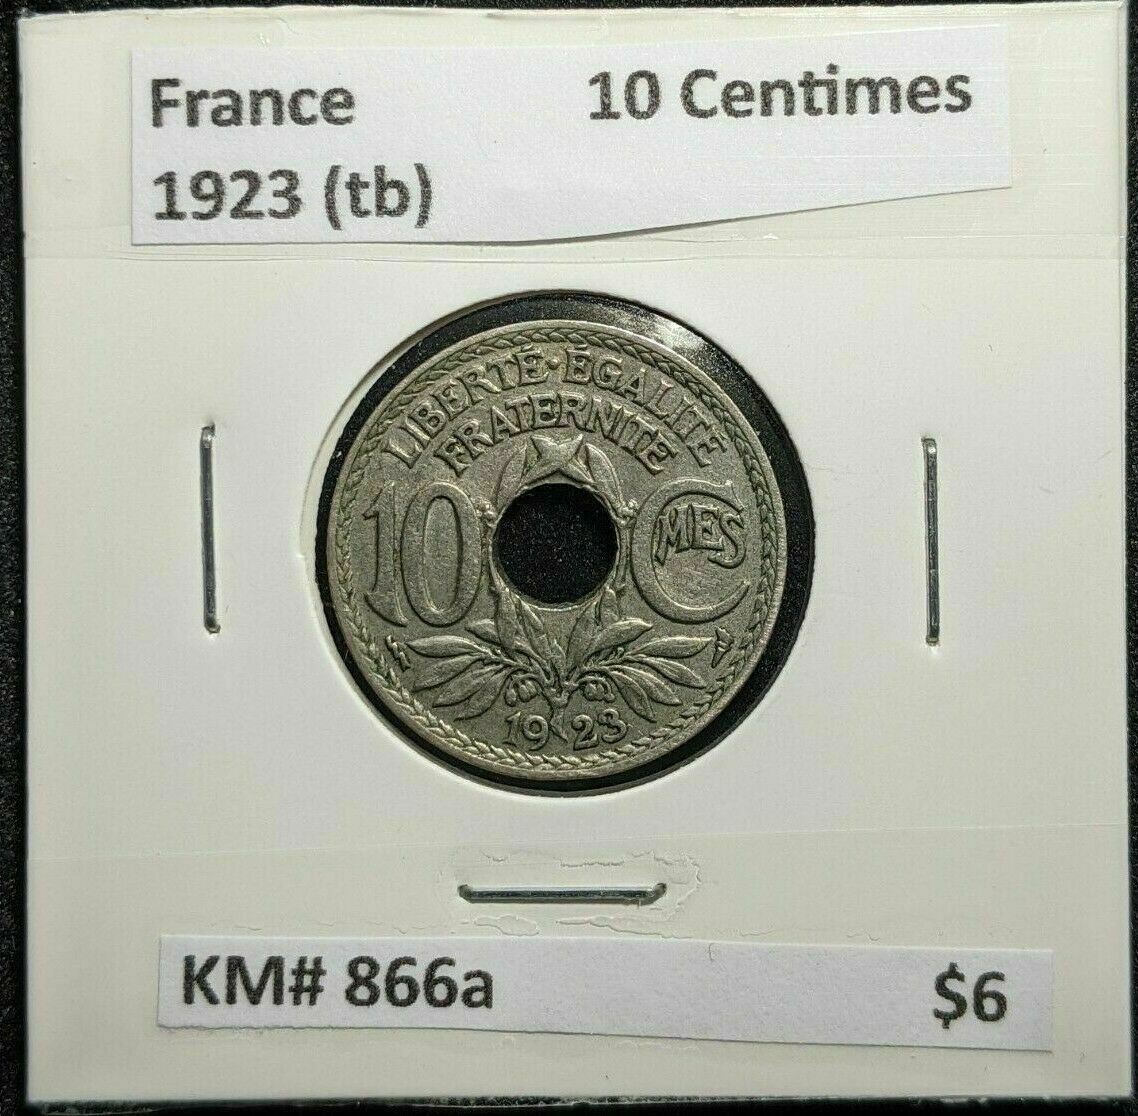 France 1923 (tb) 10 Centimes KM# 866a #829